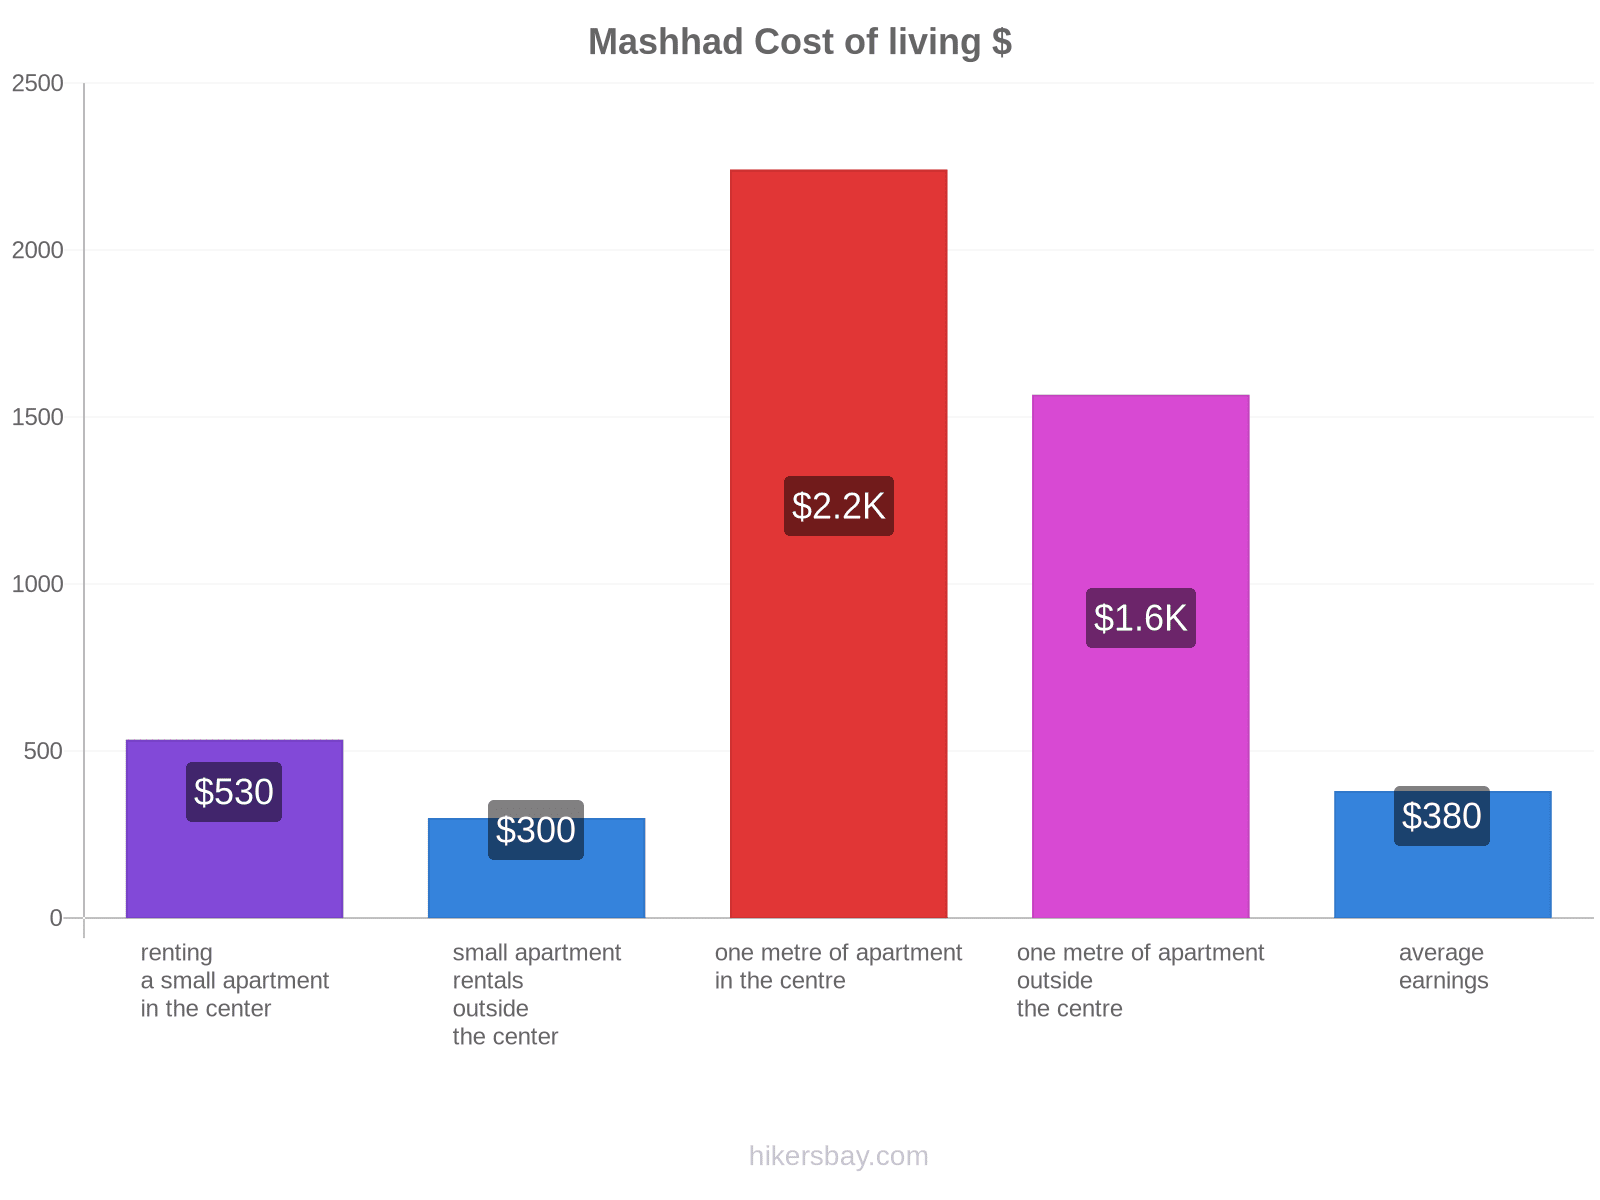 Mashhad cost of living hikersbay.com